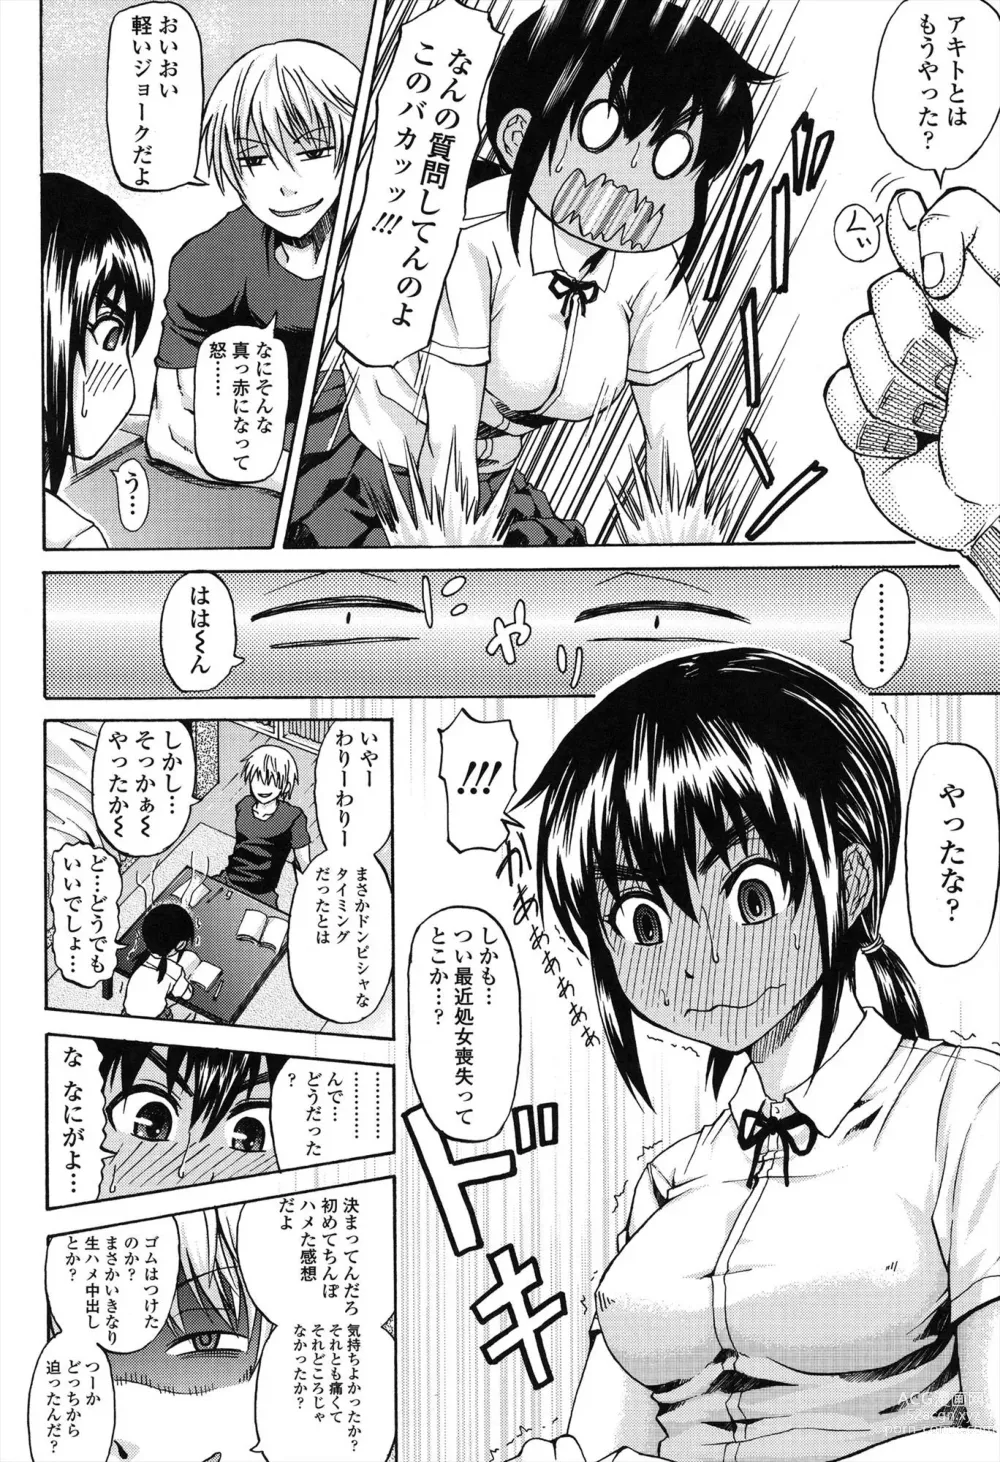 Page 6 of manga Repeat Libido